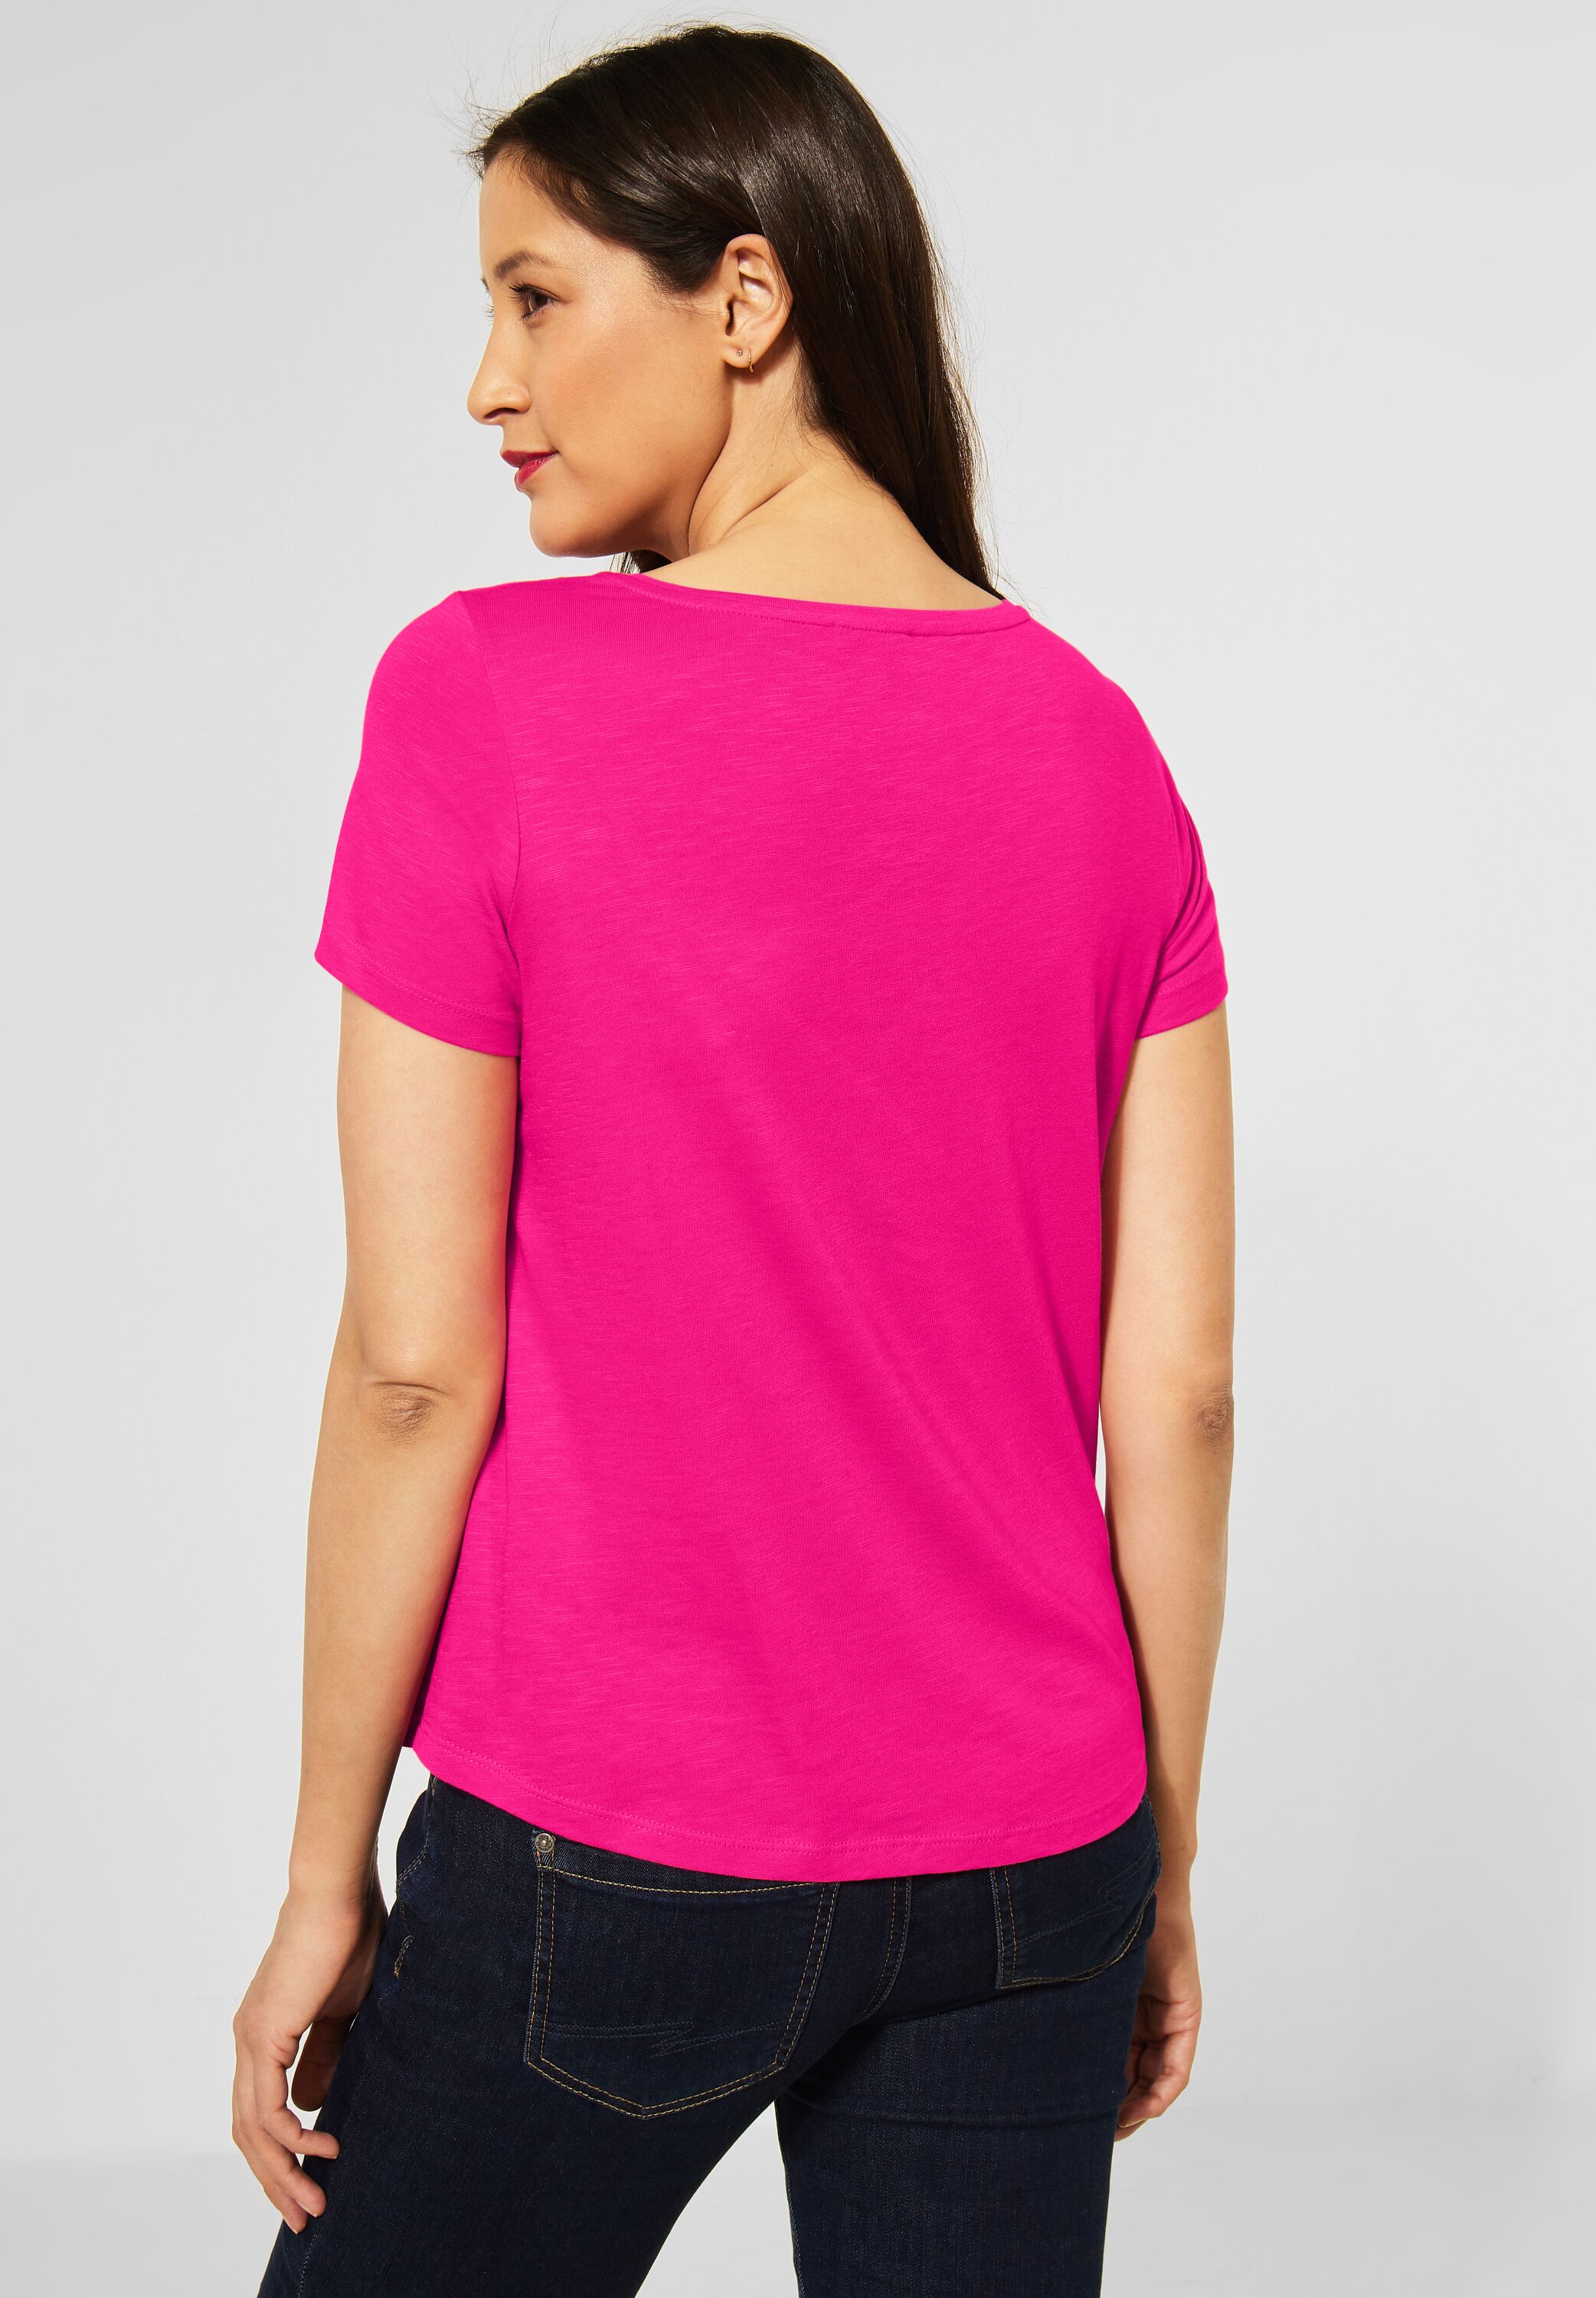 Street One T-Shirt New Gerda in Powerful Pink im SALE reduziert  A317569-13611 - CONCEPT Mode